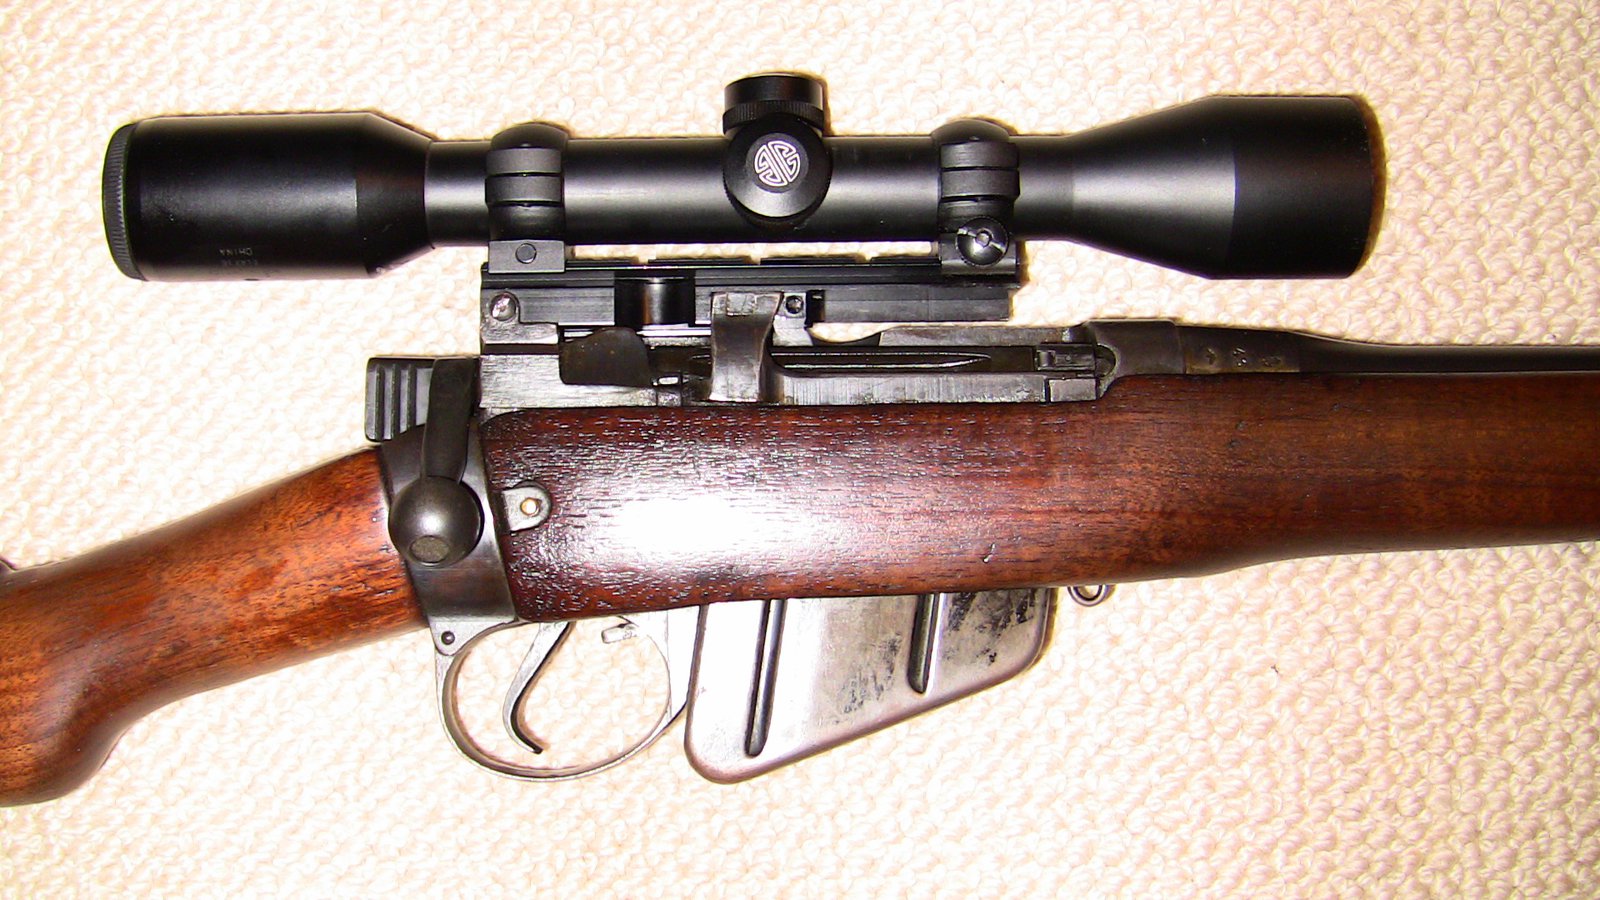 Rifle 2